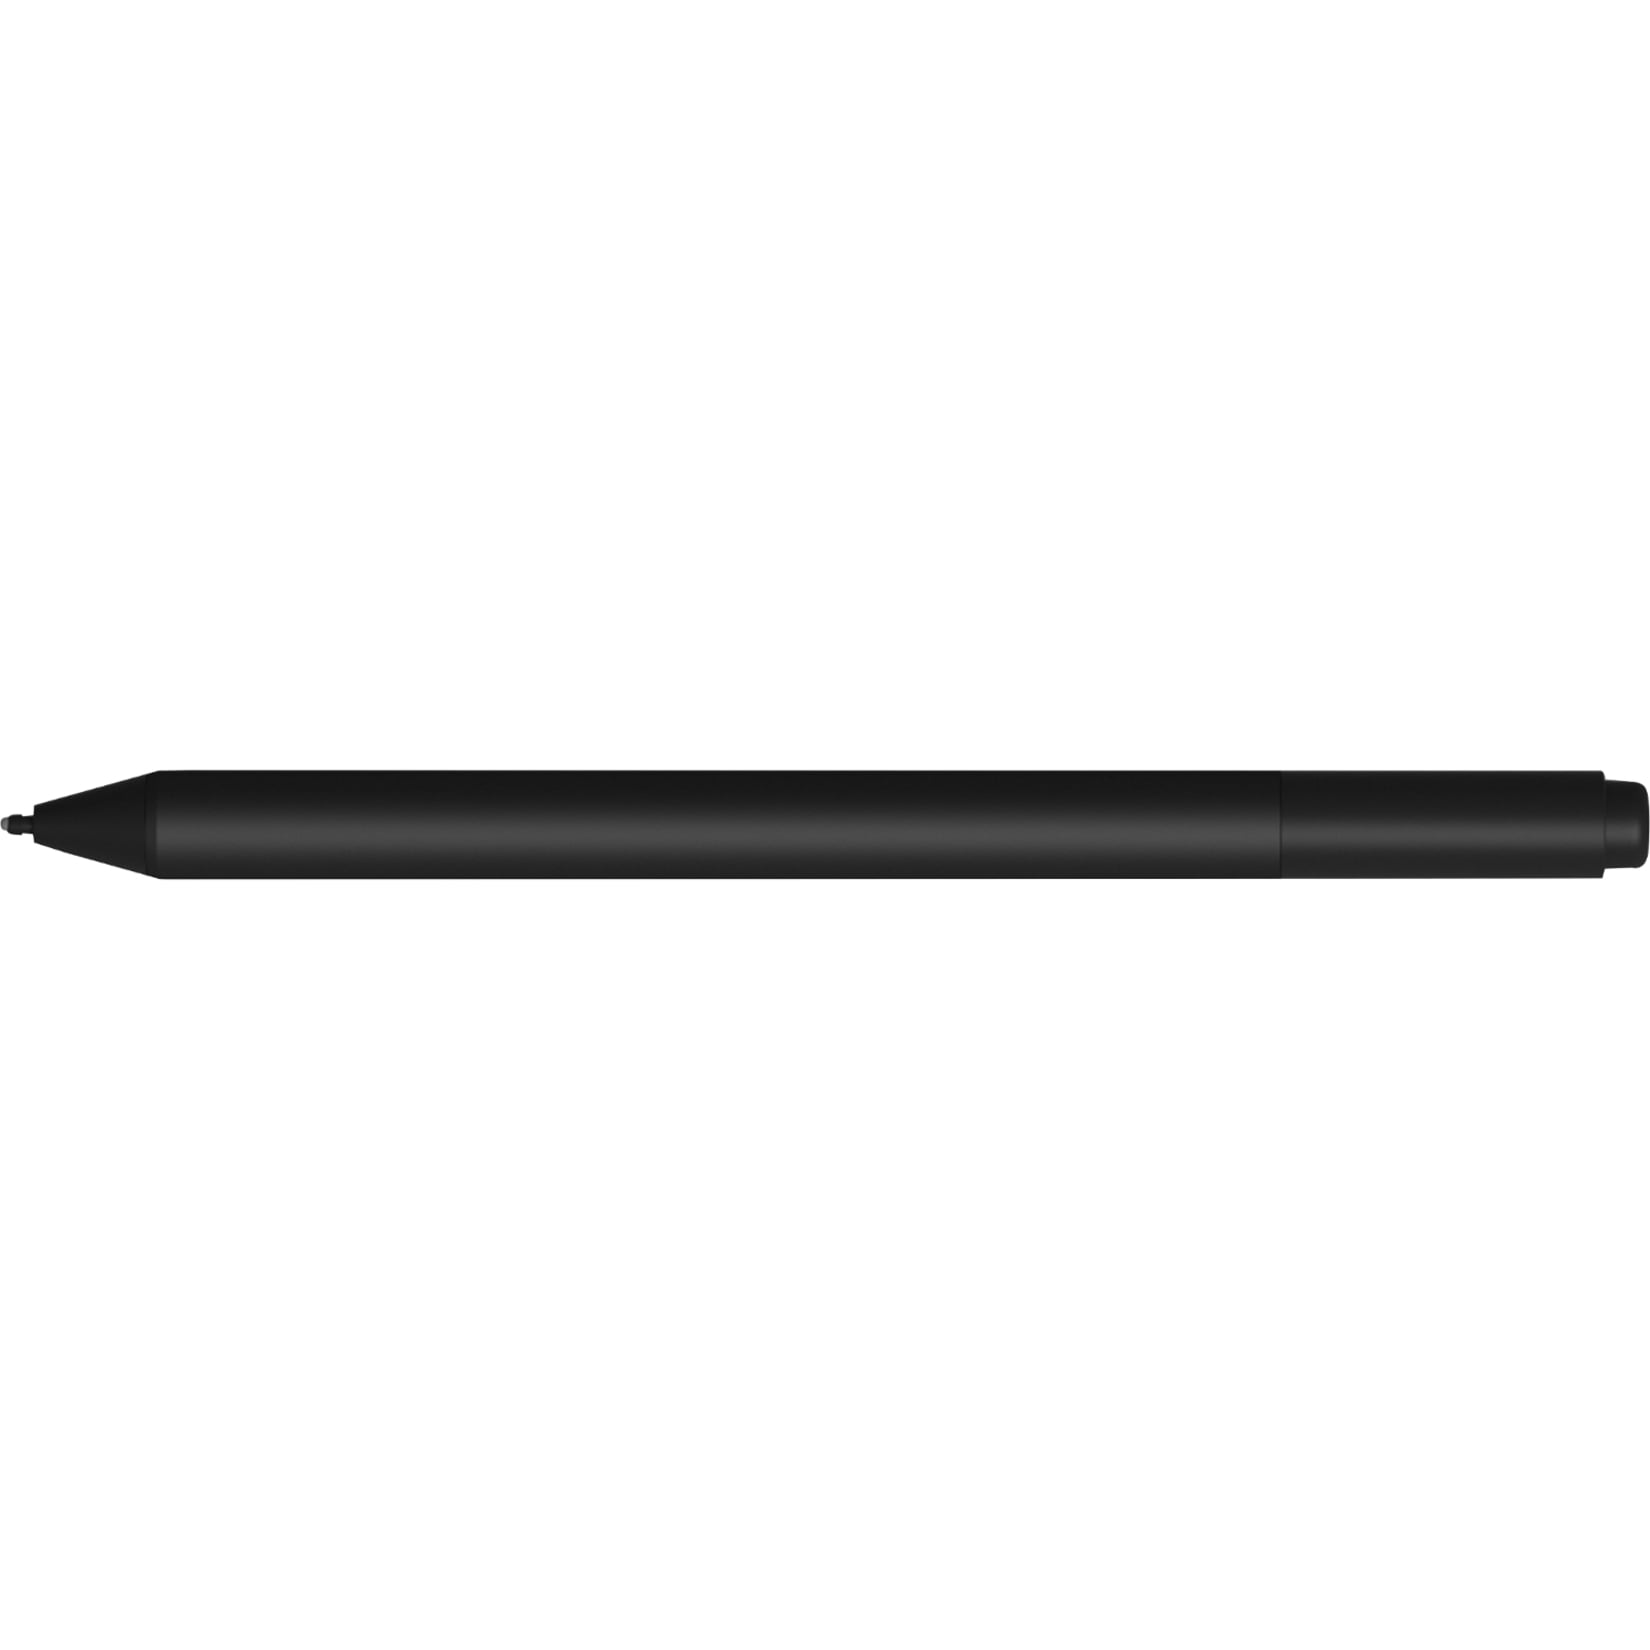 Microsoft Official Surface Pen Stylus Renewed Charcoal Black 1776 EYV-00001 